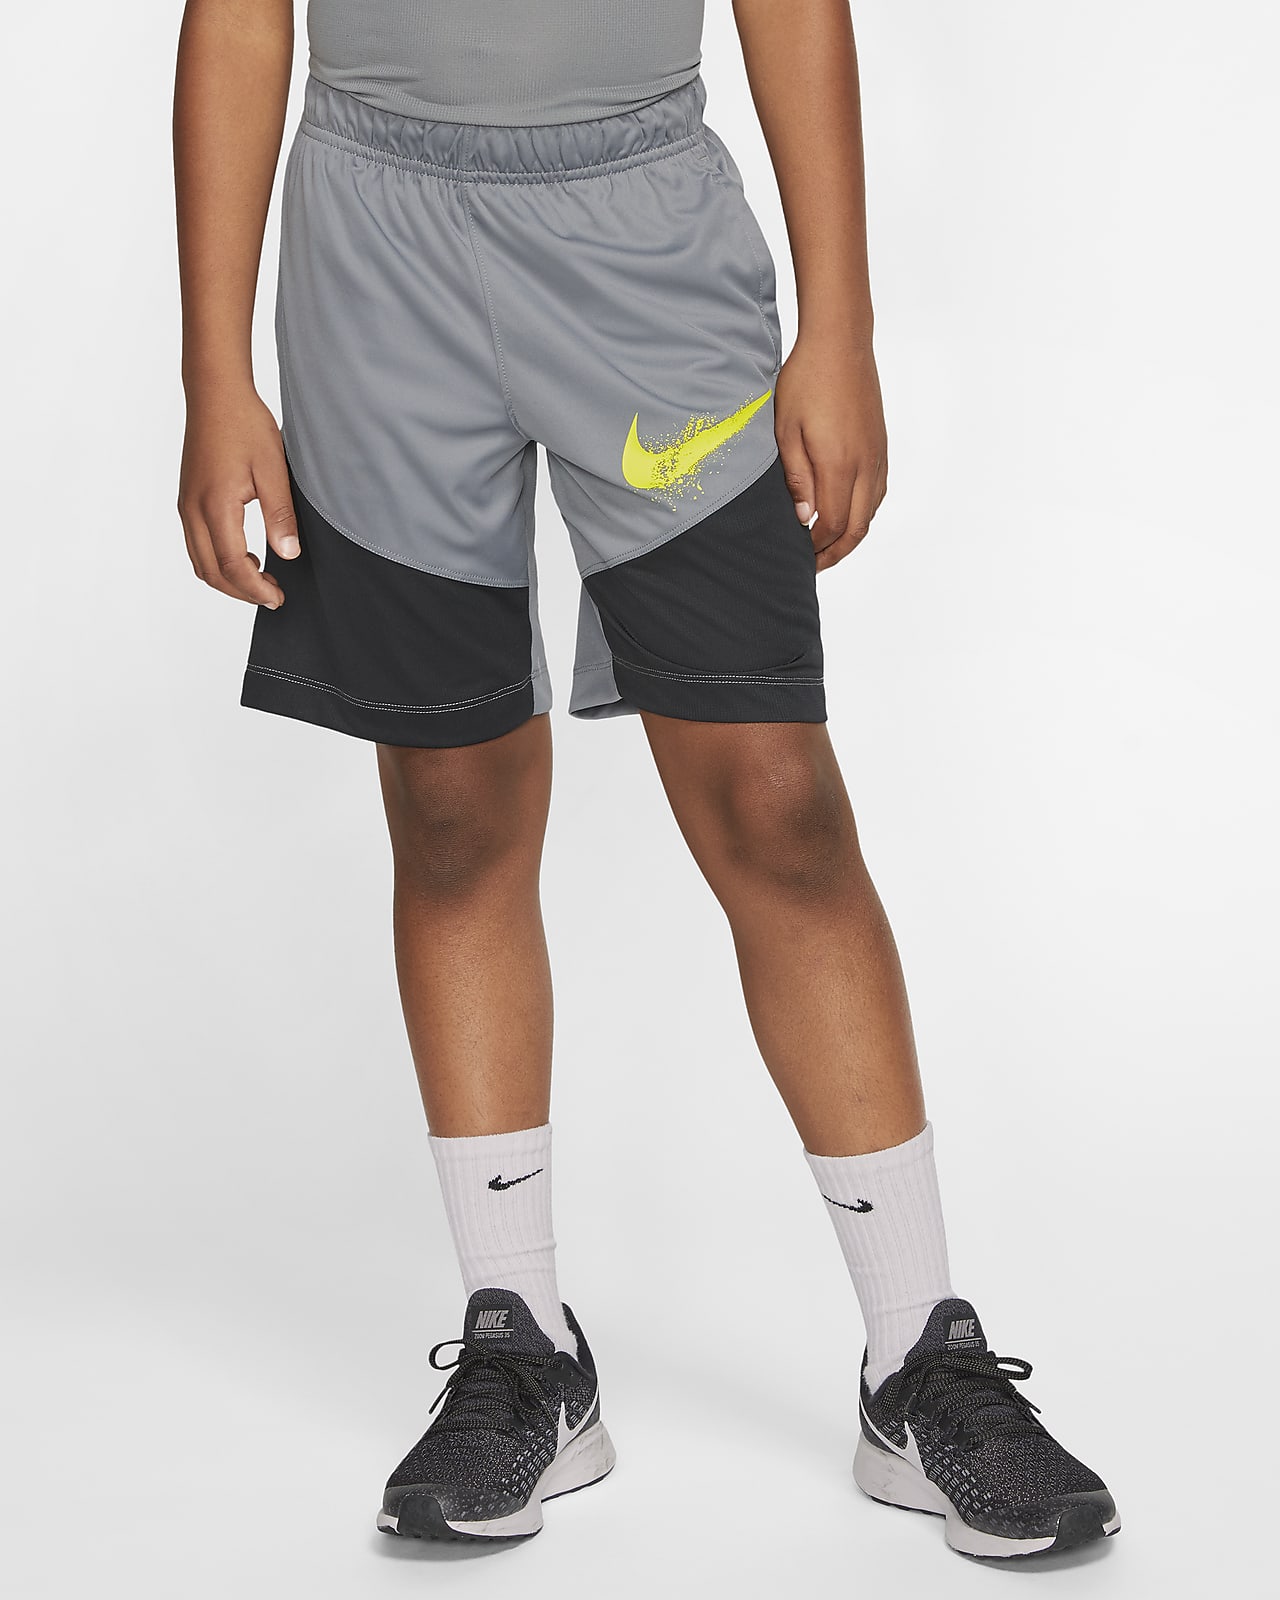 Nike Older Kids' (Boys') Graphic Training Shorts